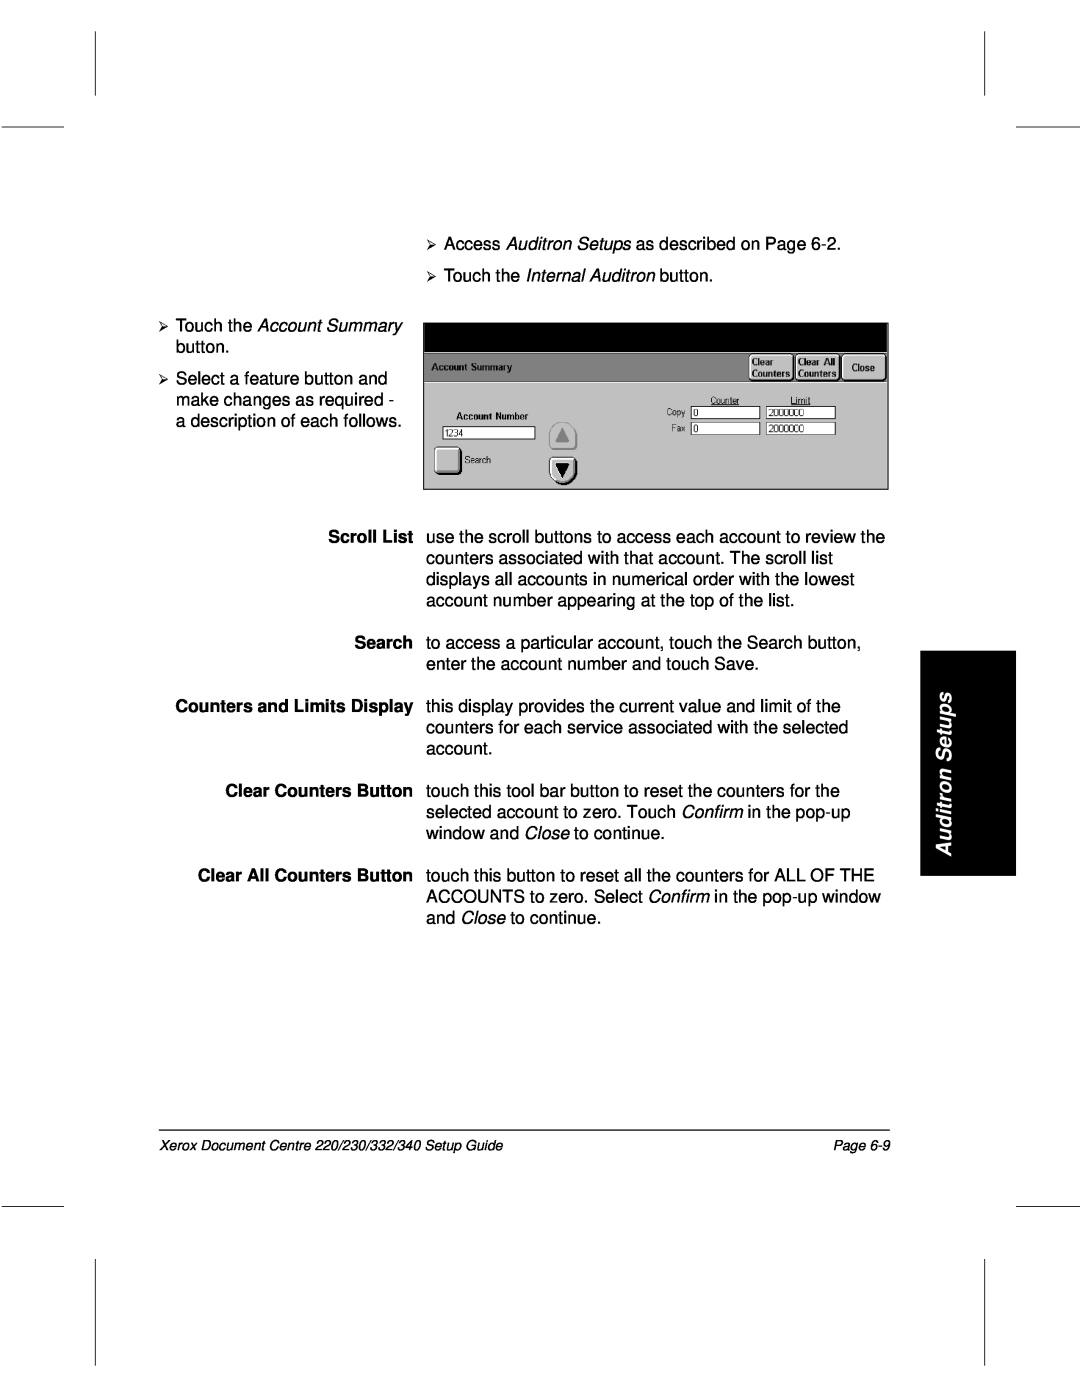 Xerox 230, 340, 332, 220 setup guide Auditron Setups, Touch the Account Summary 